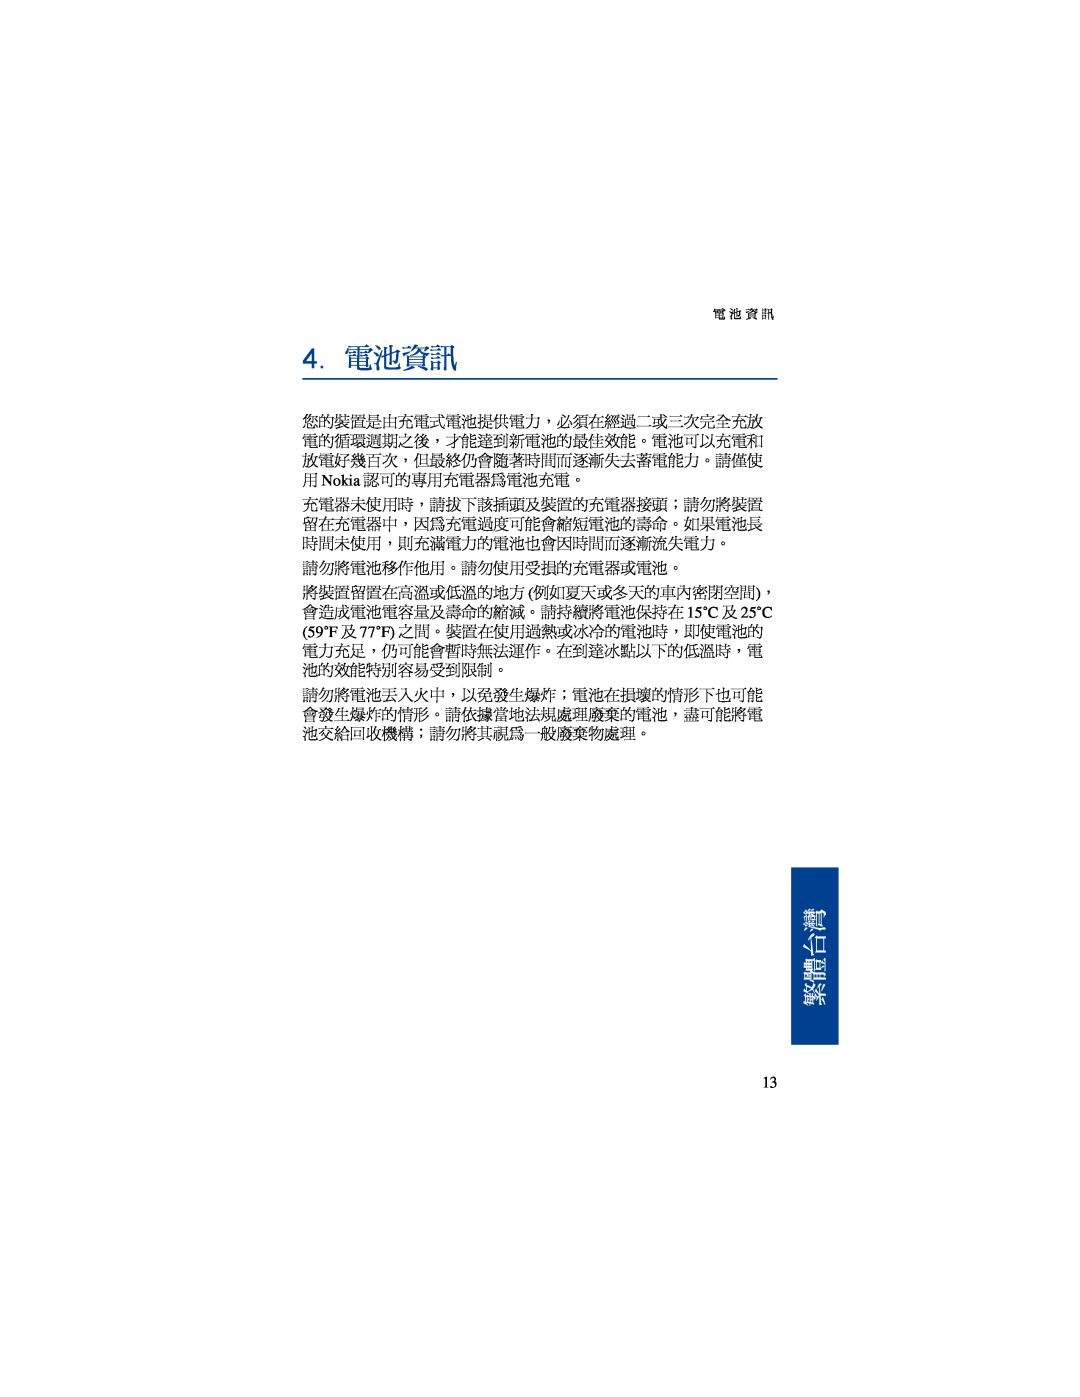 Nokia BH-500 manual 4.電池資訊, 繁體台灣 